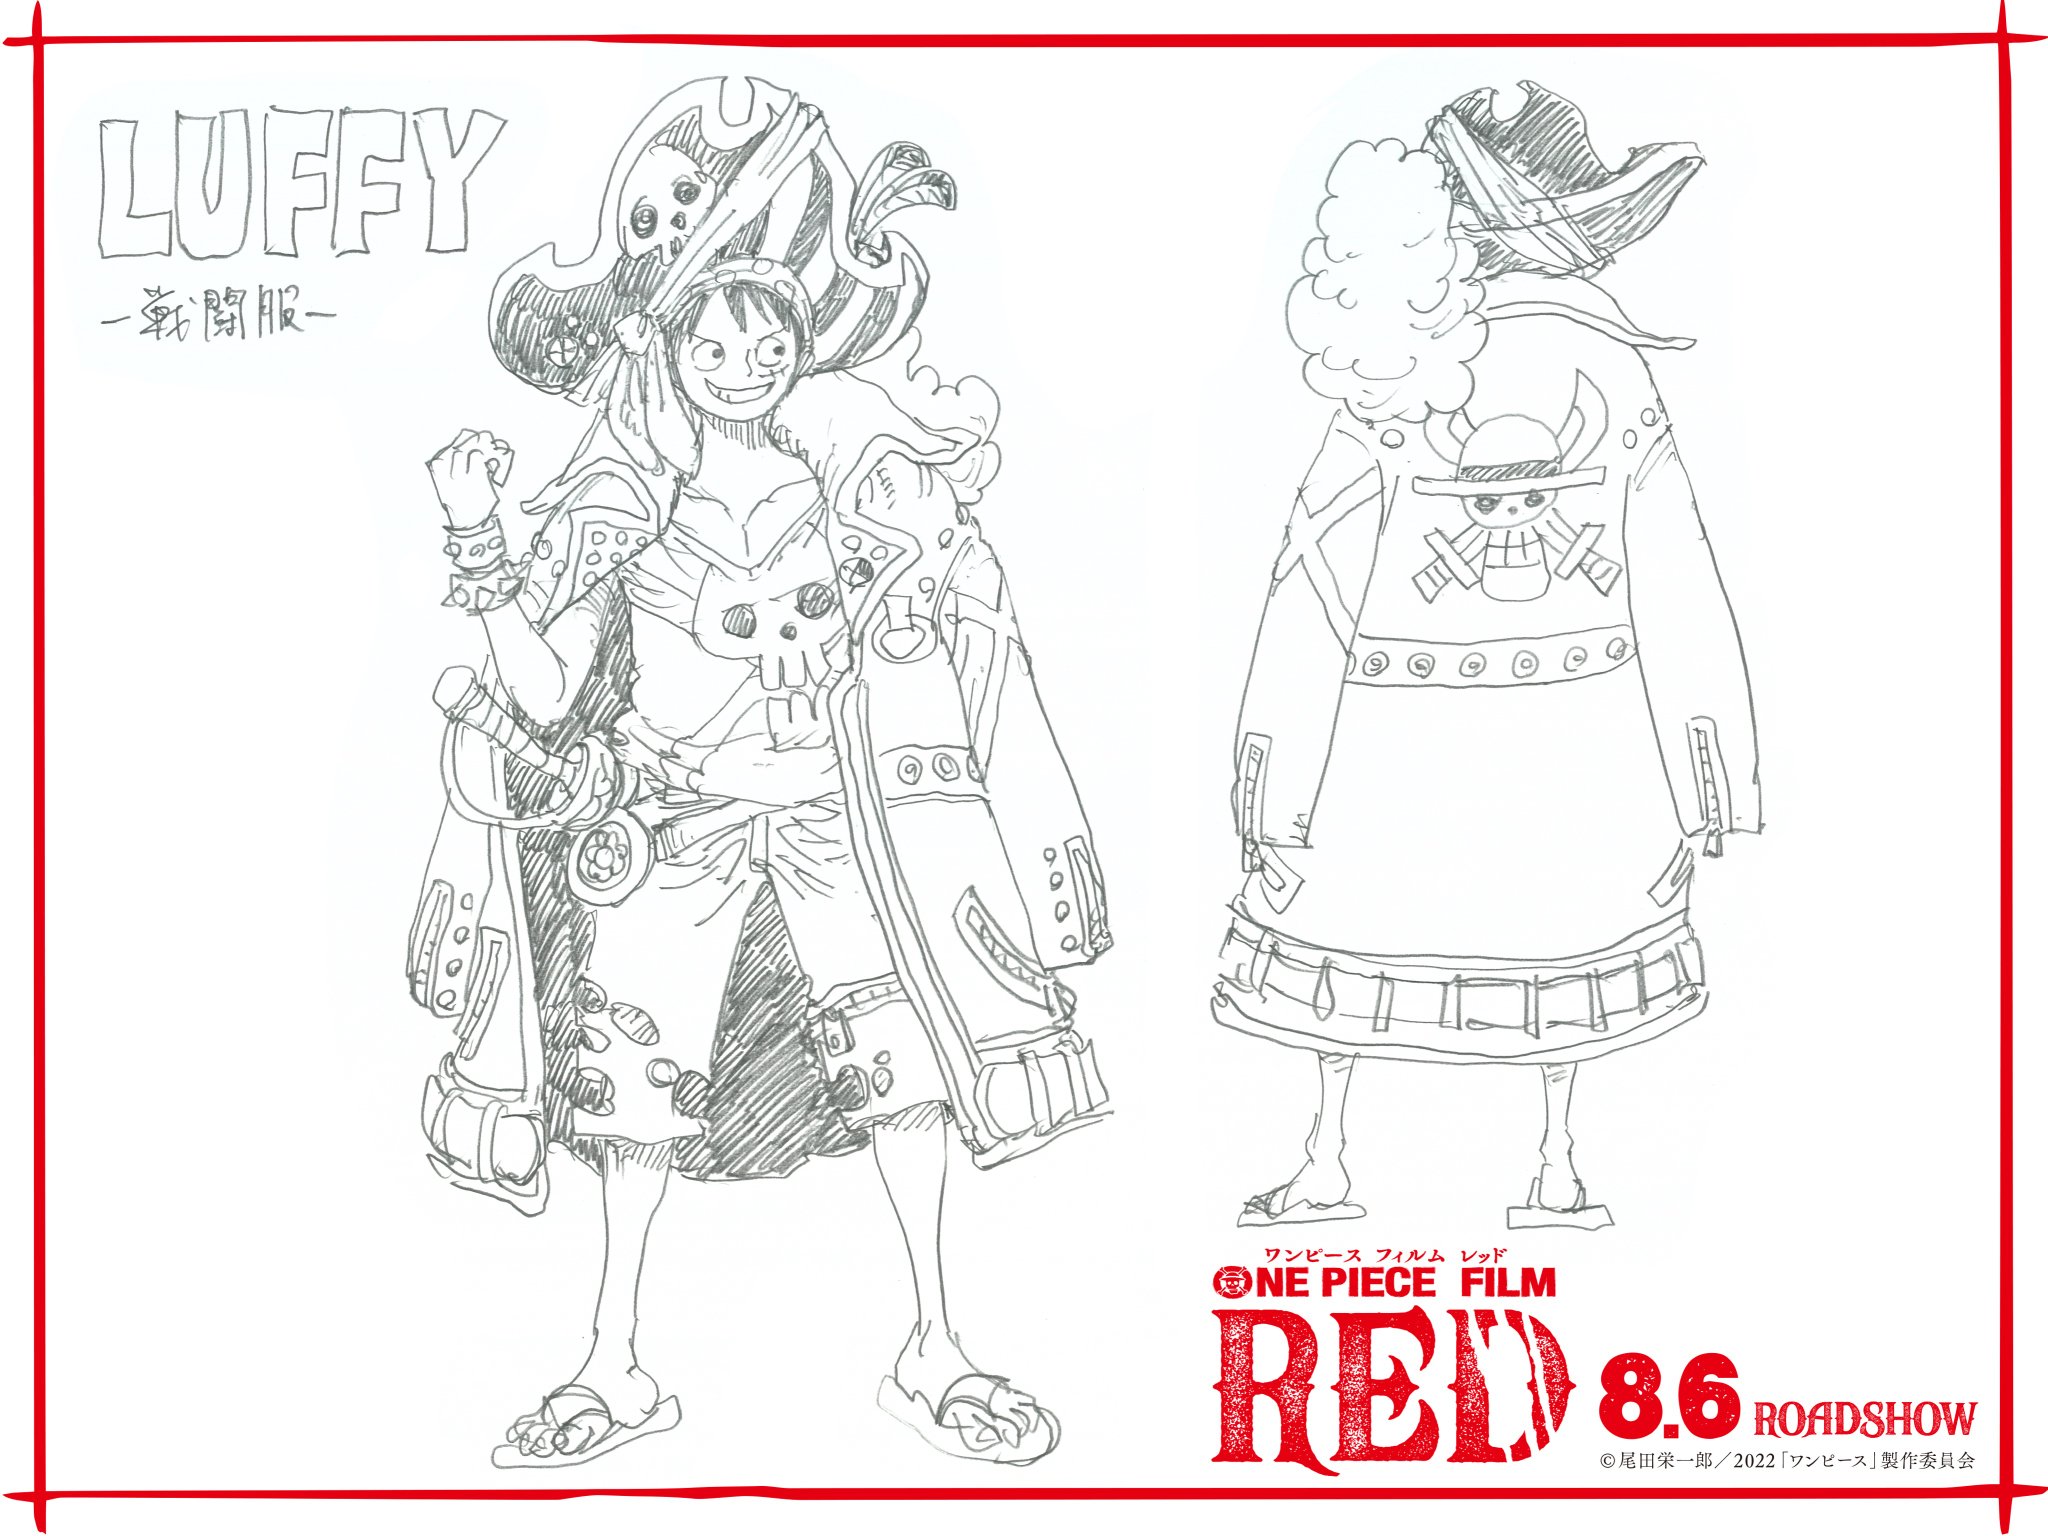 One piece filme red: "uniforme de combate" de luffy.